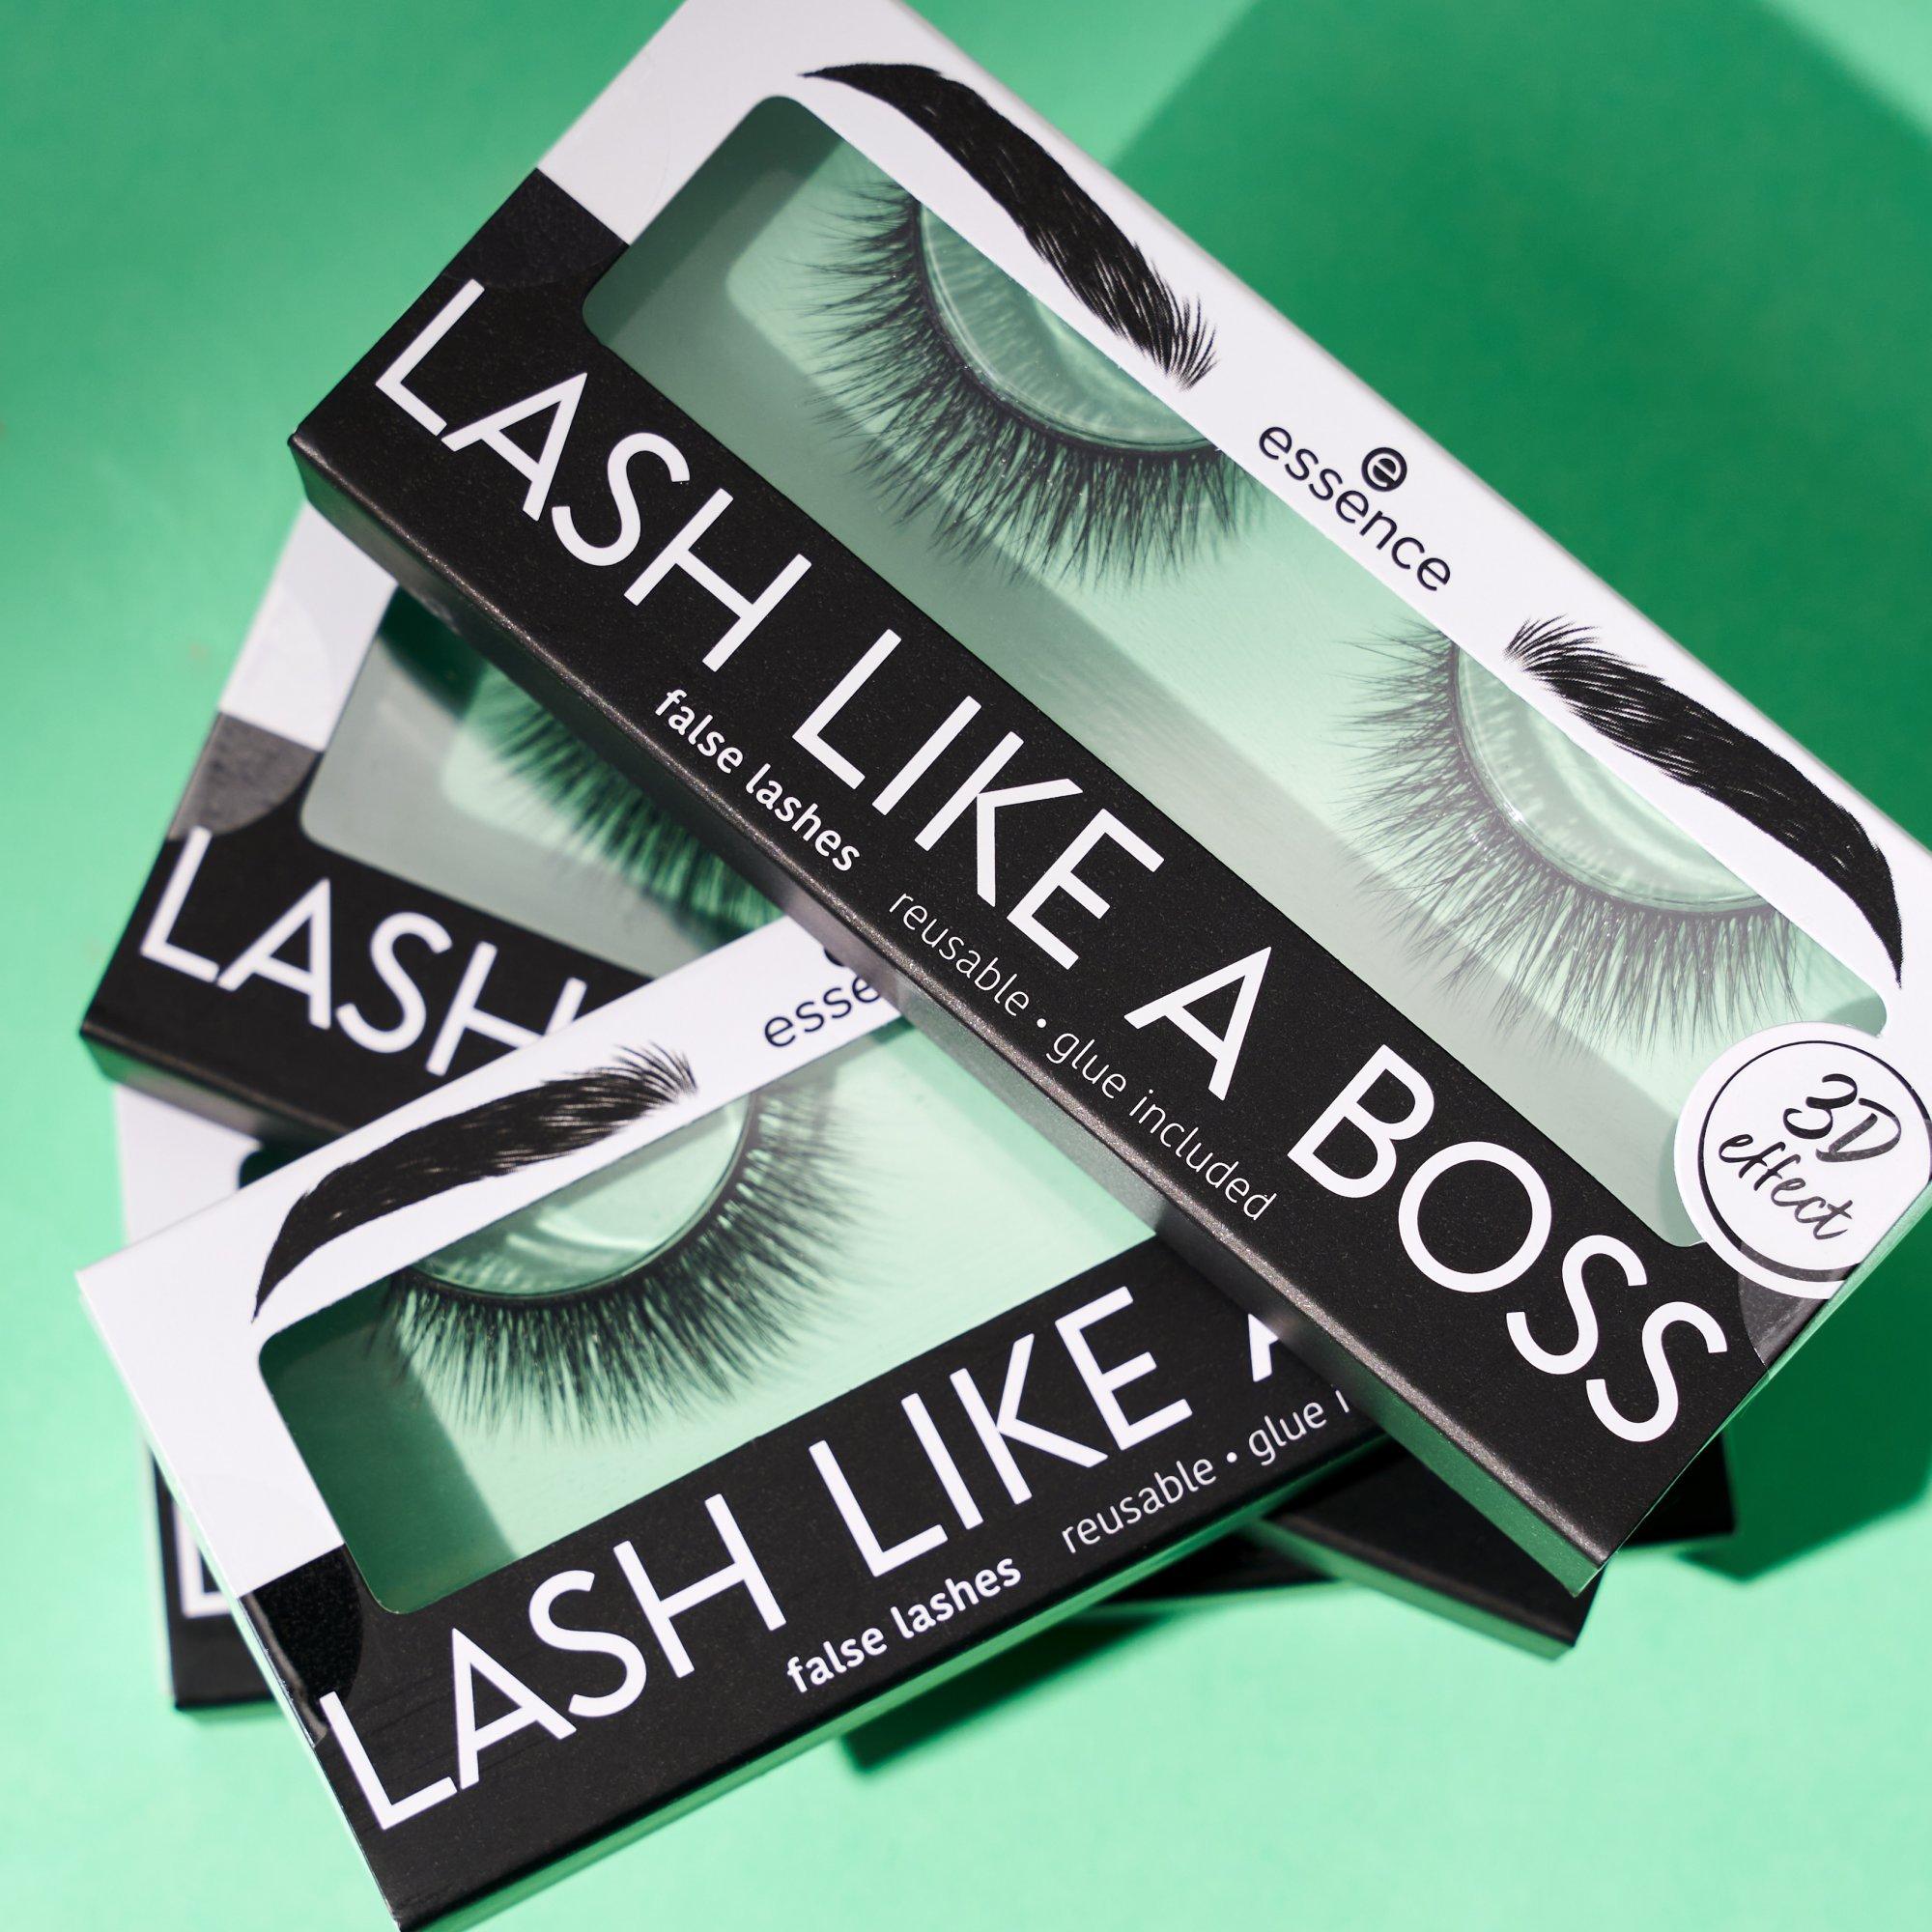 LASH LIKE A BOSS false lashes